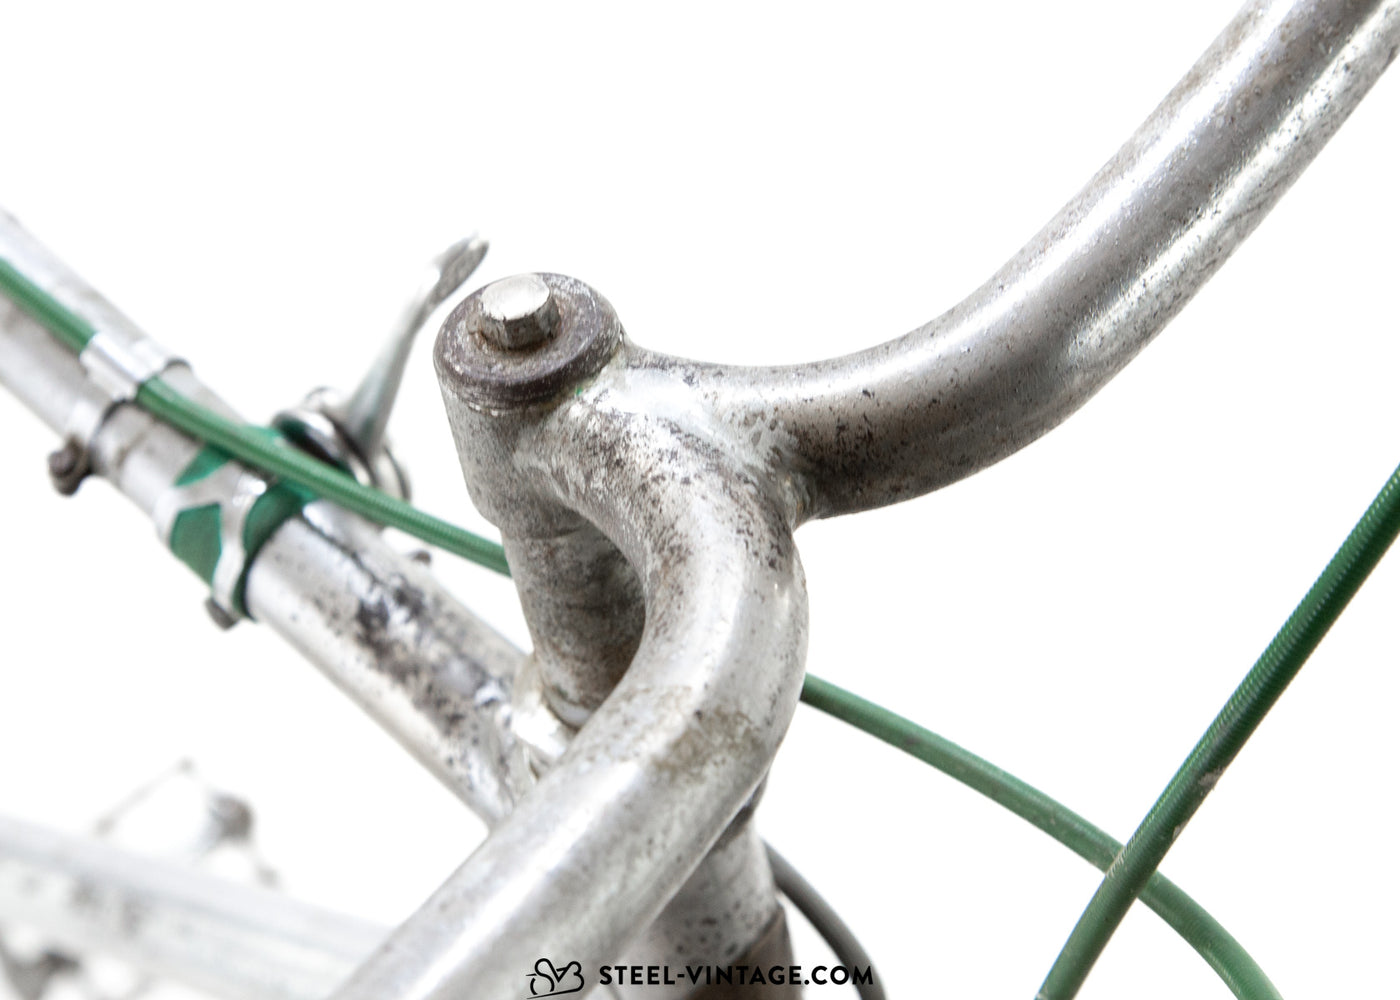 C. Soncini Italienisches gefedertes Fahrrad 1940er Jahre